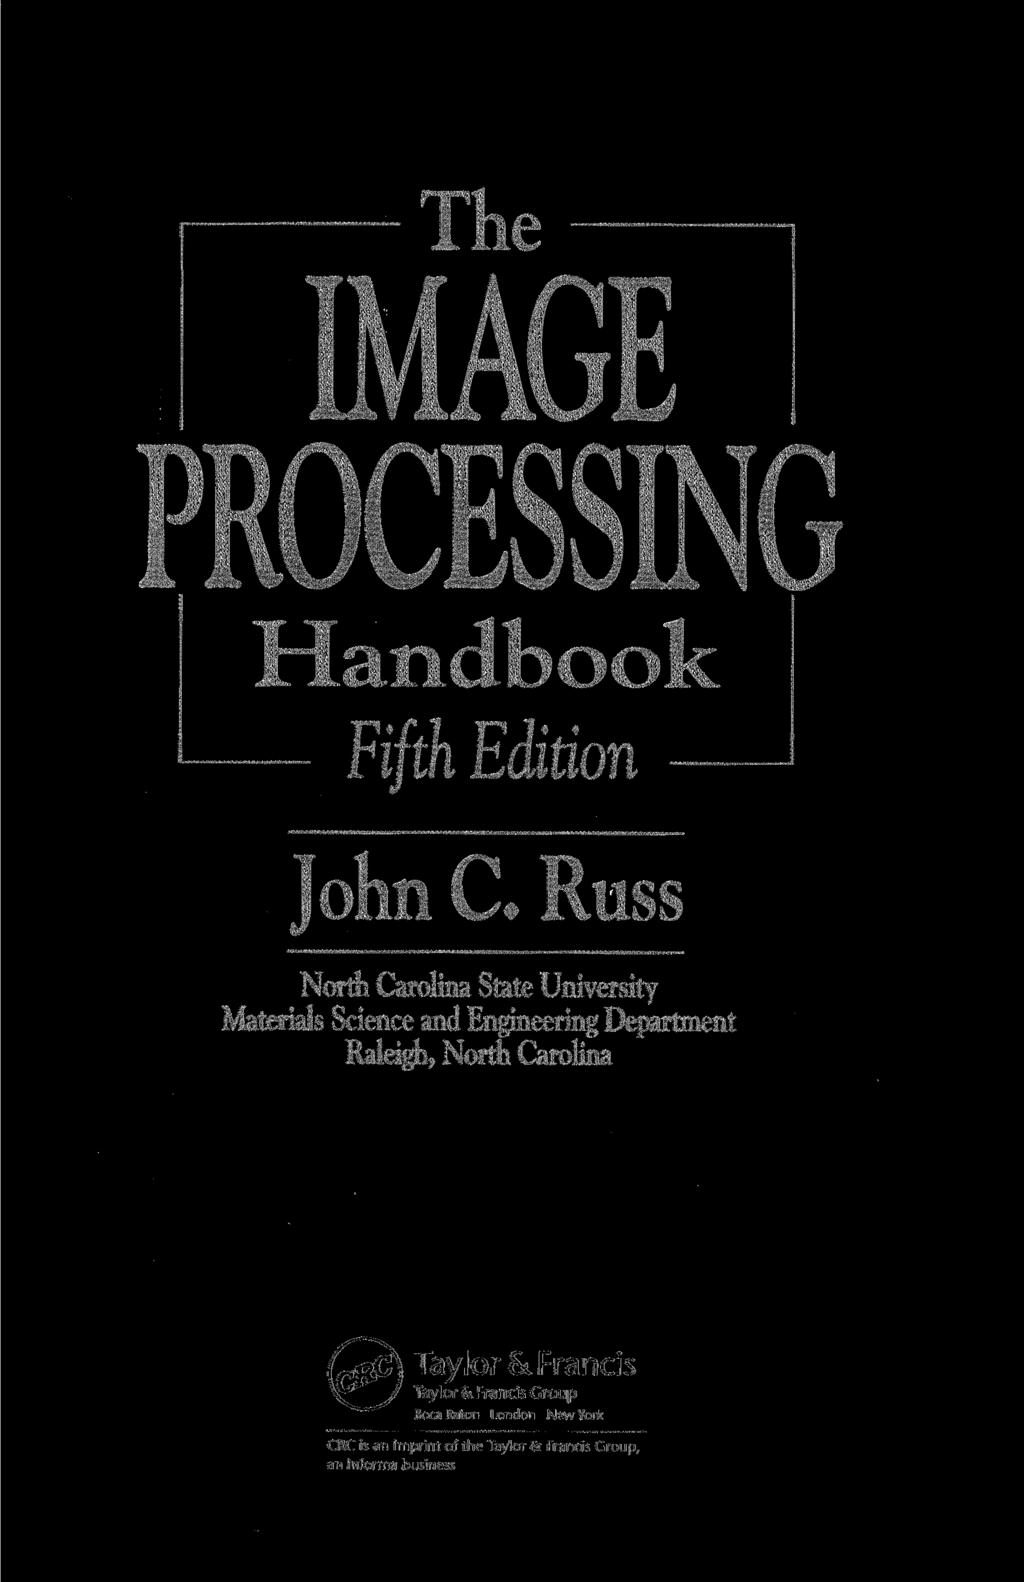 The IMAGE PROCESSING Handbook ijthbdition John C.